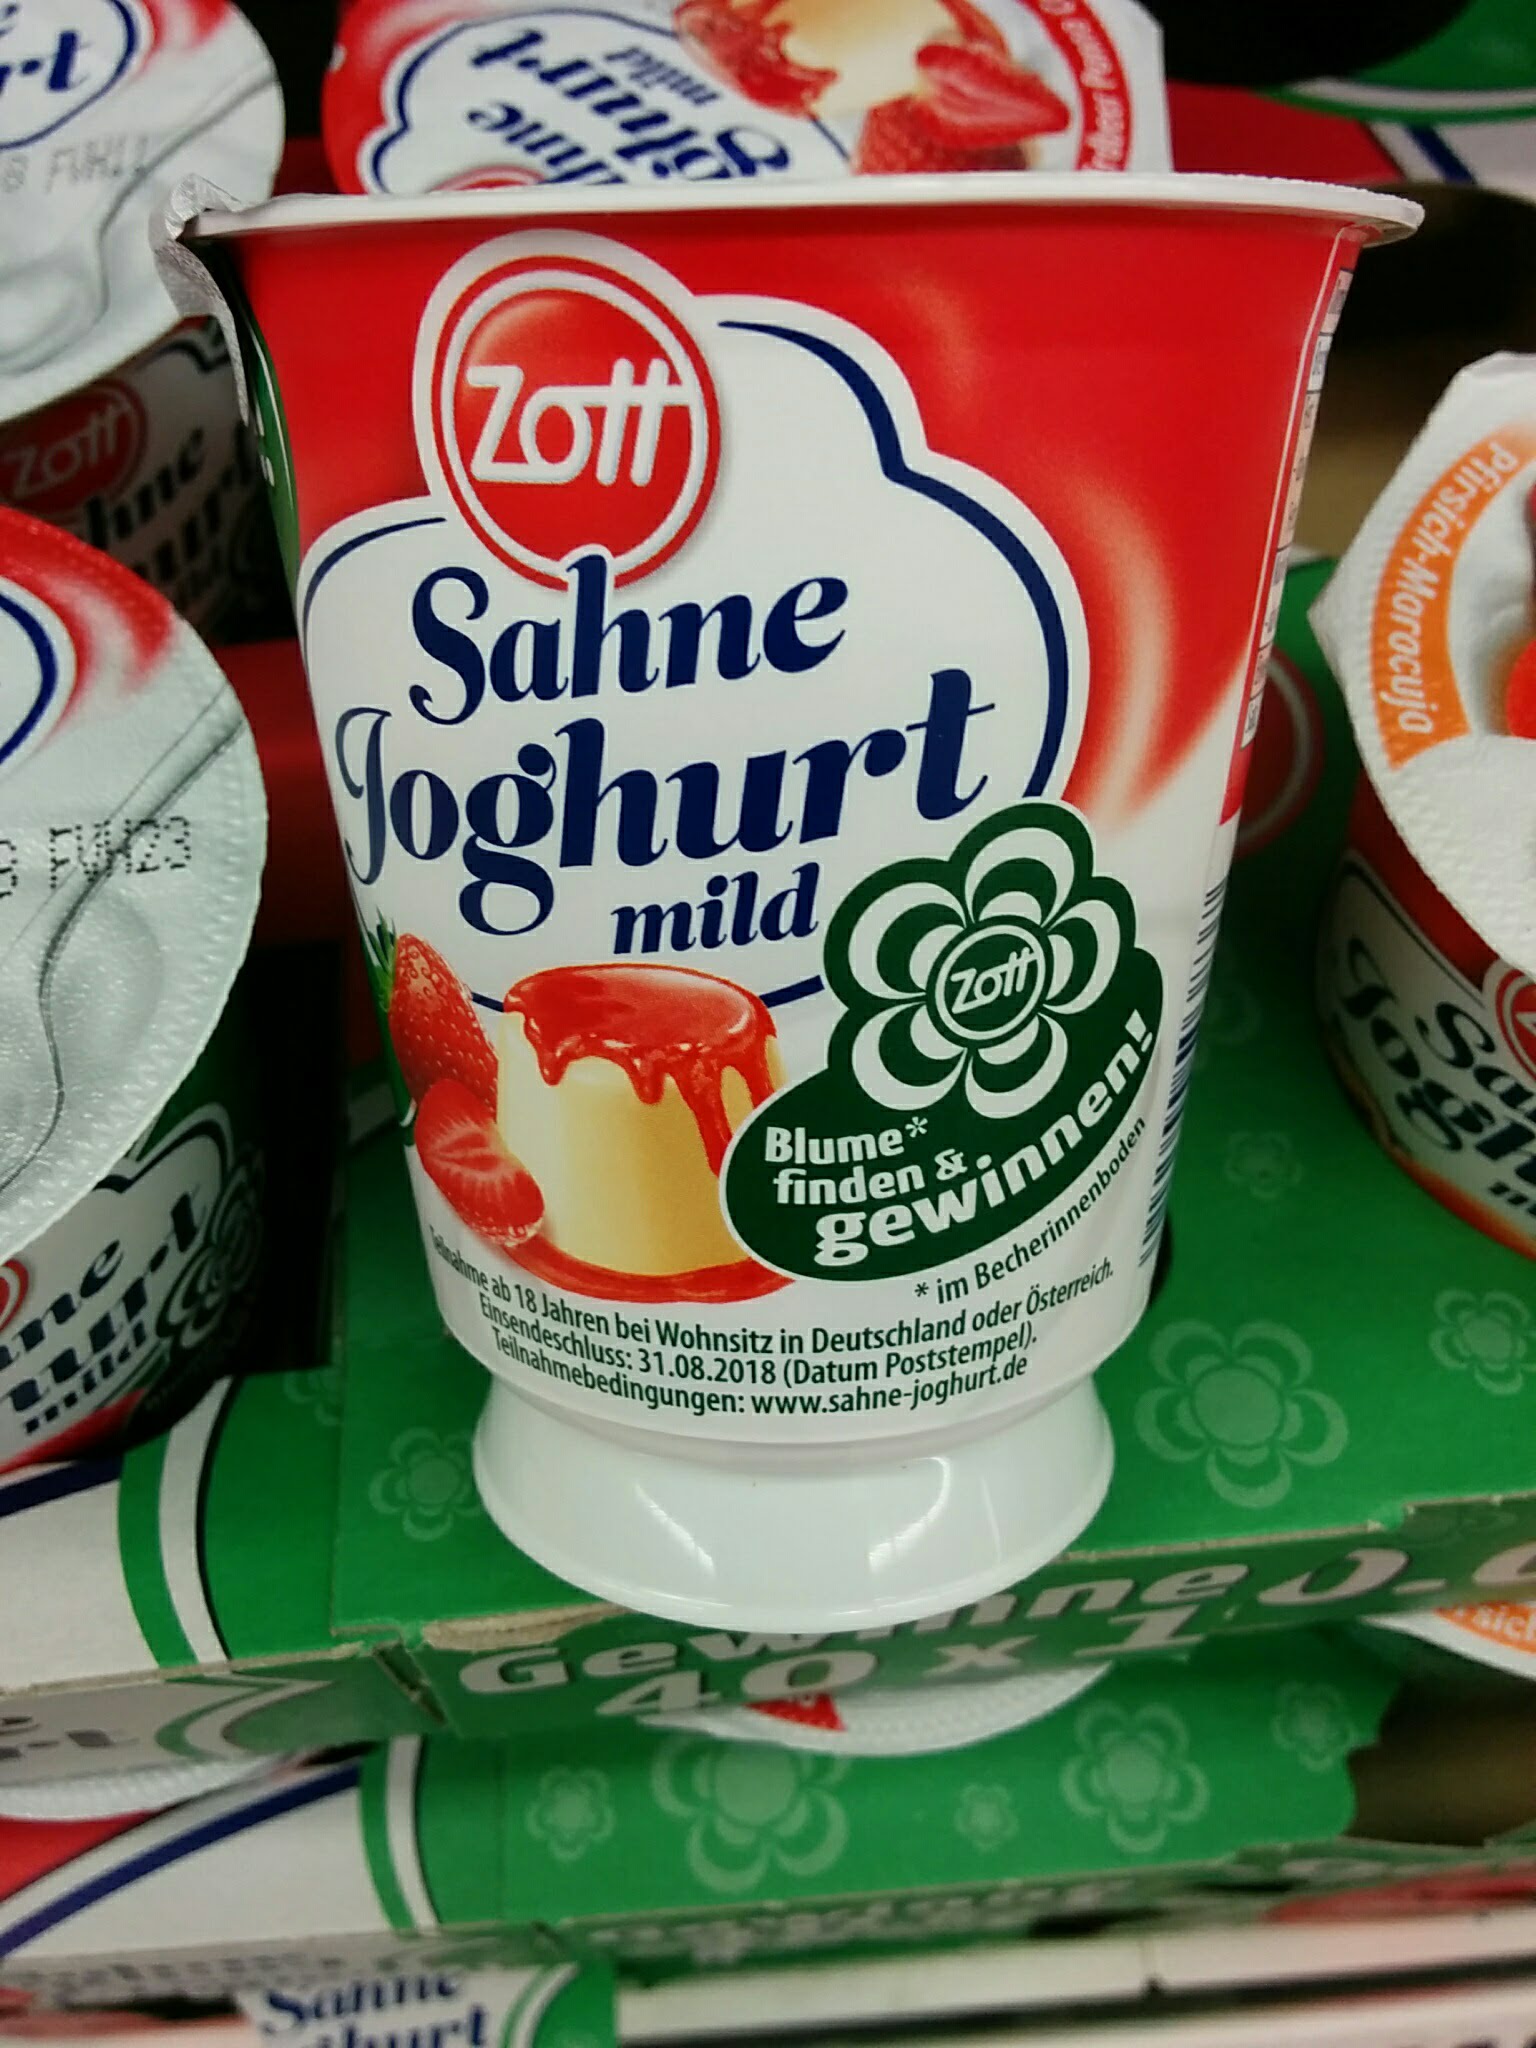 Zott Sahne Joghurt - Blume